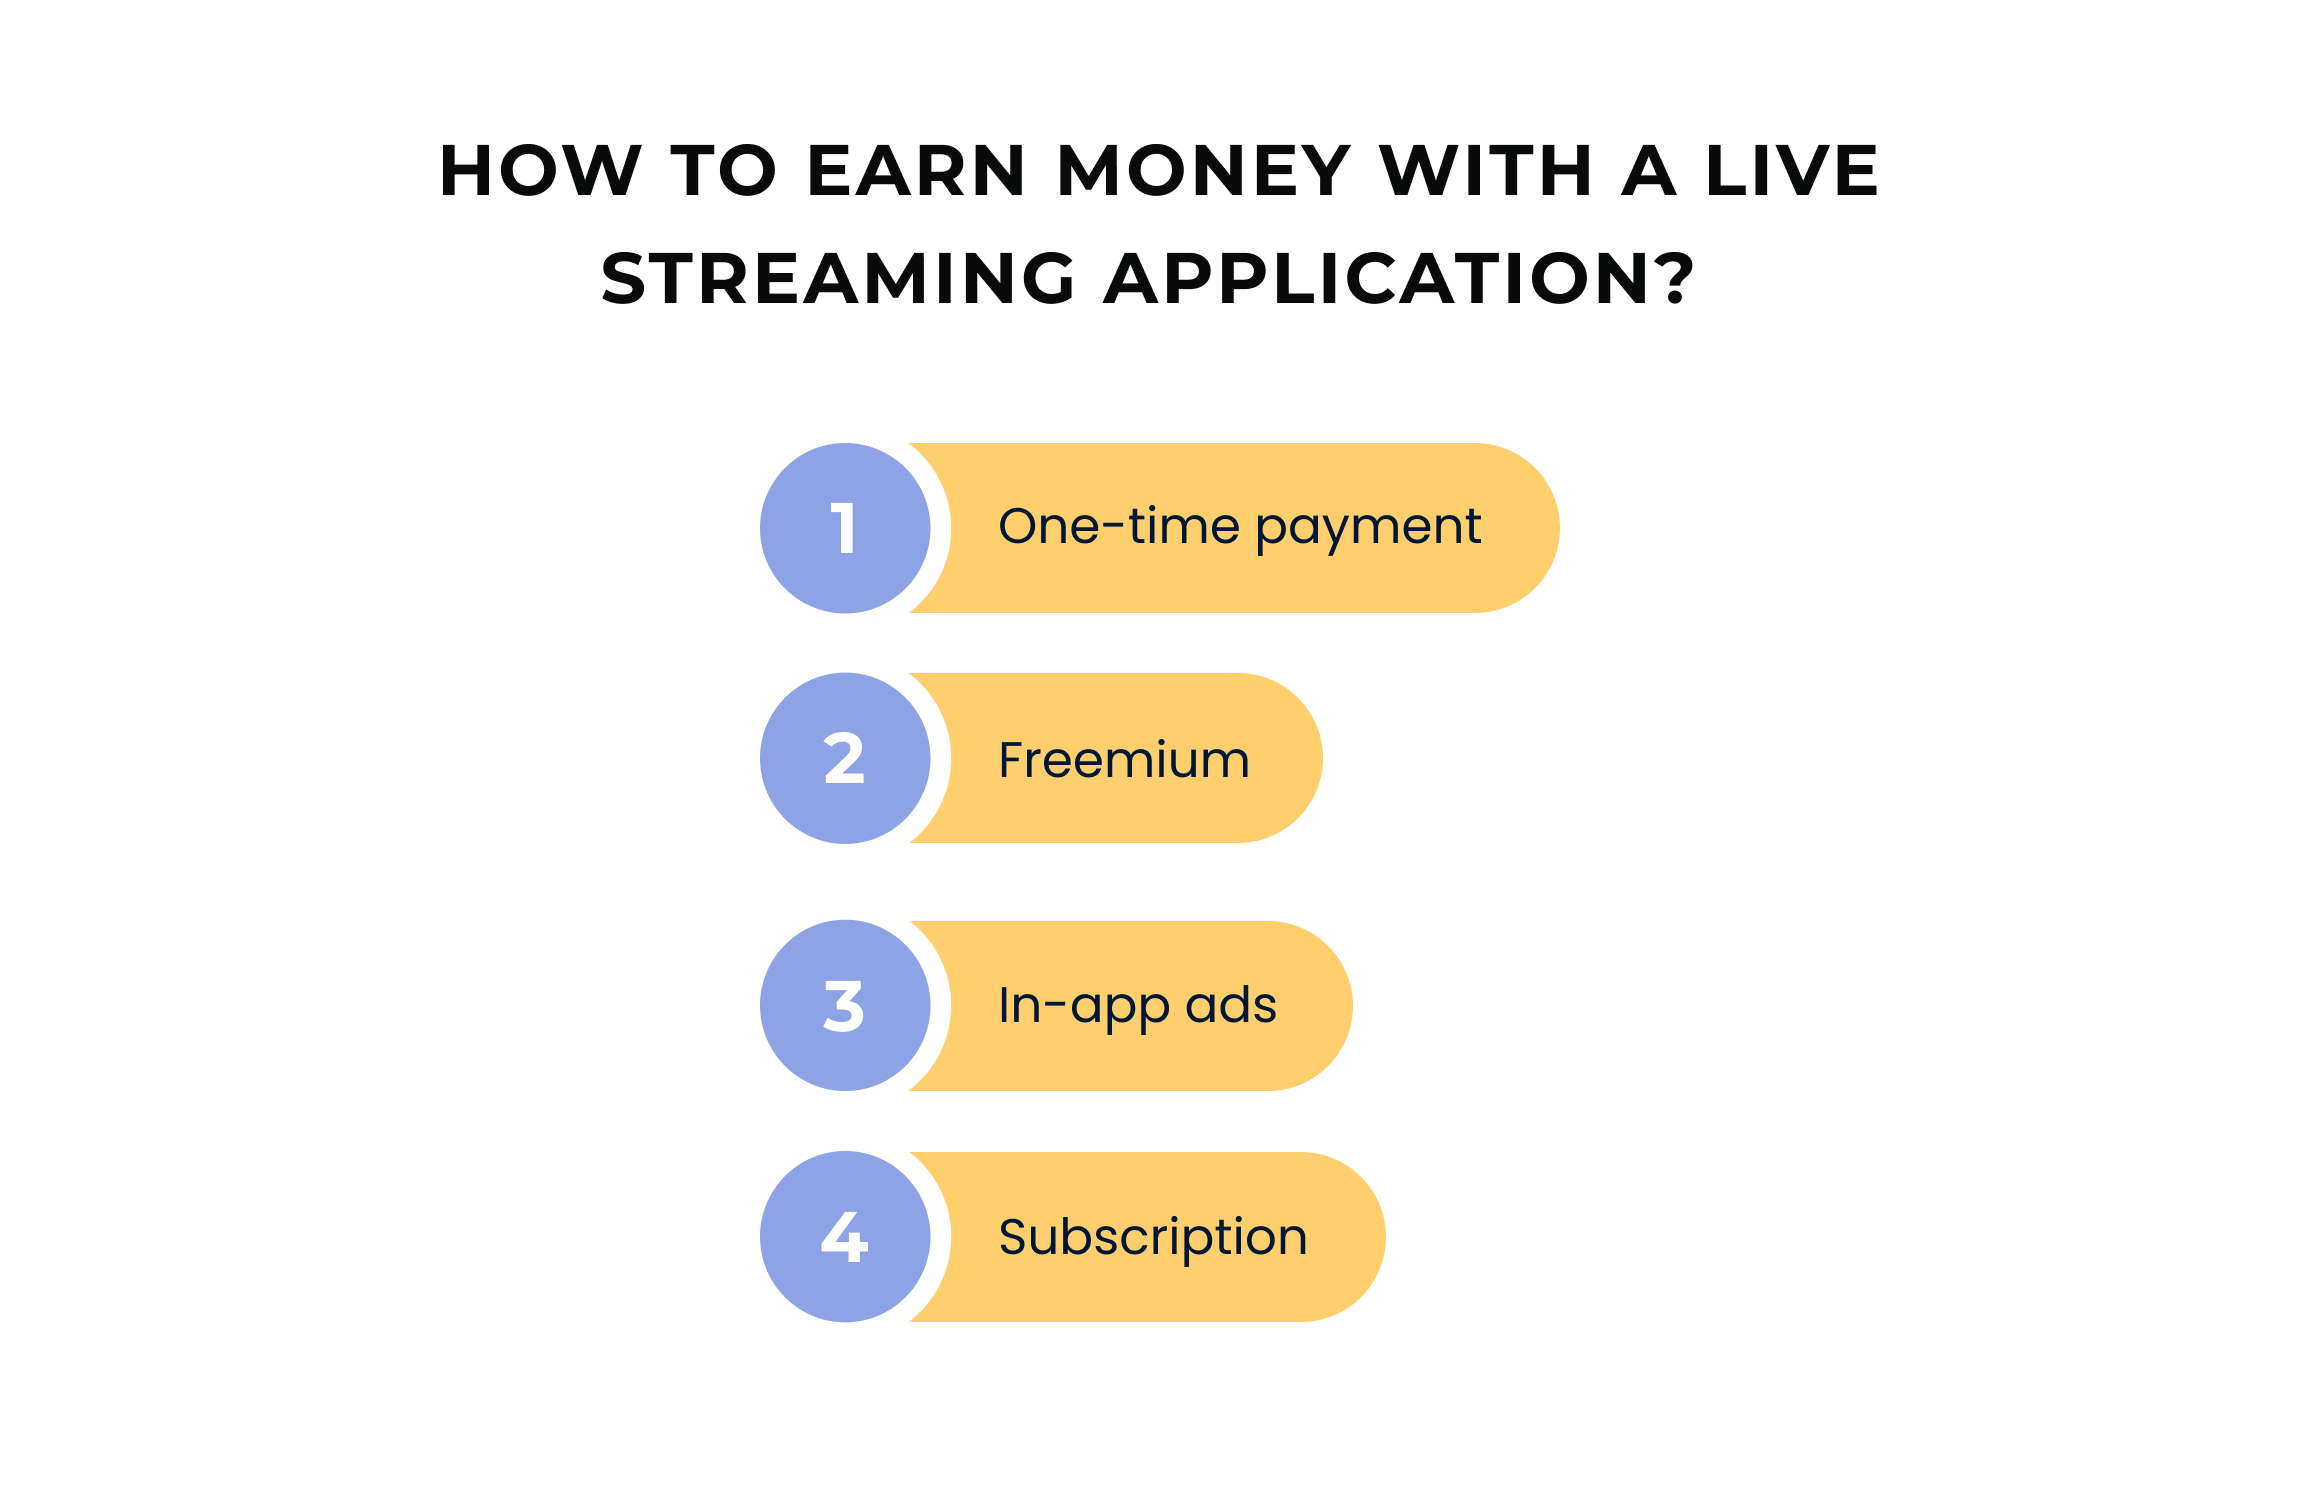 Live streaming application monetization models 